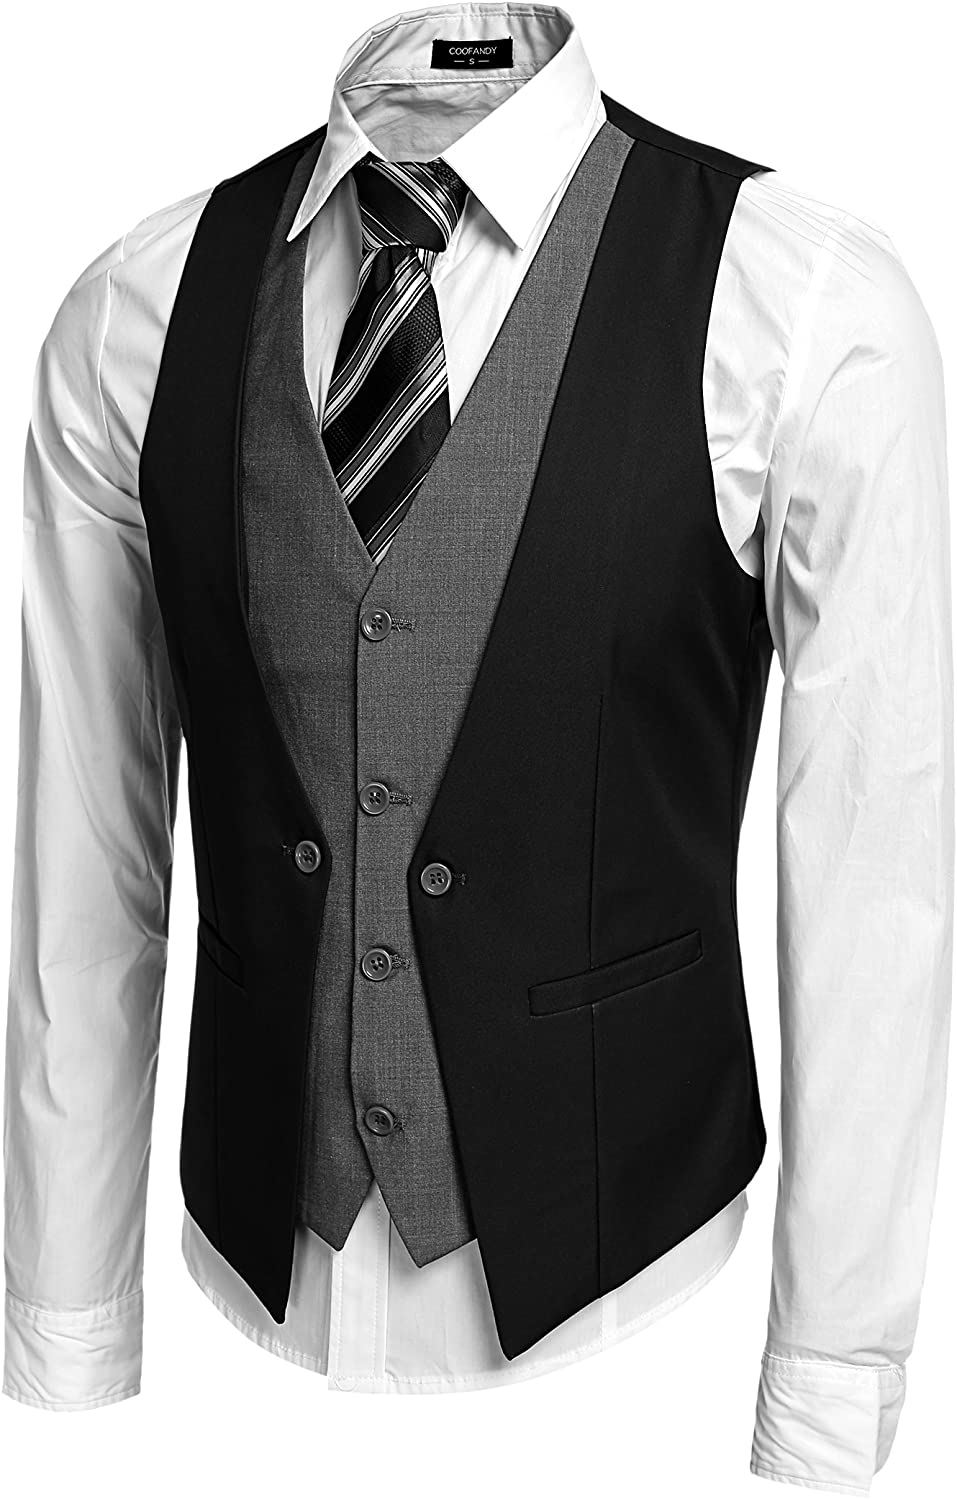 Coofandy Men’s Formal Layered Slim Fit Suit Vest Premium Business Waistcoat 